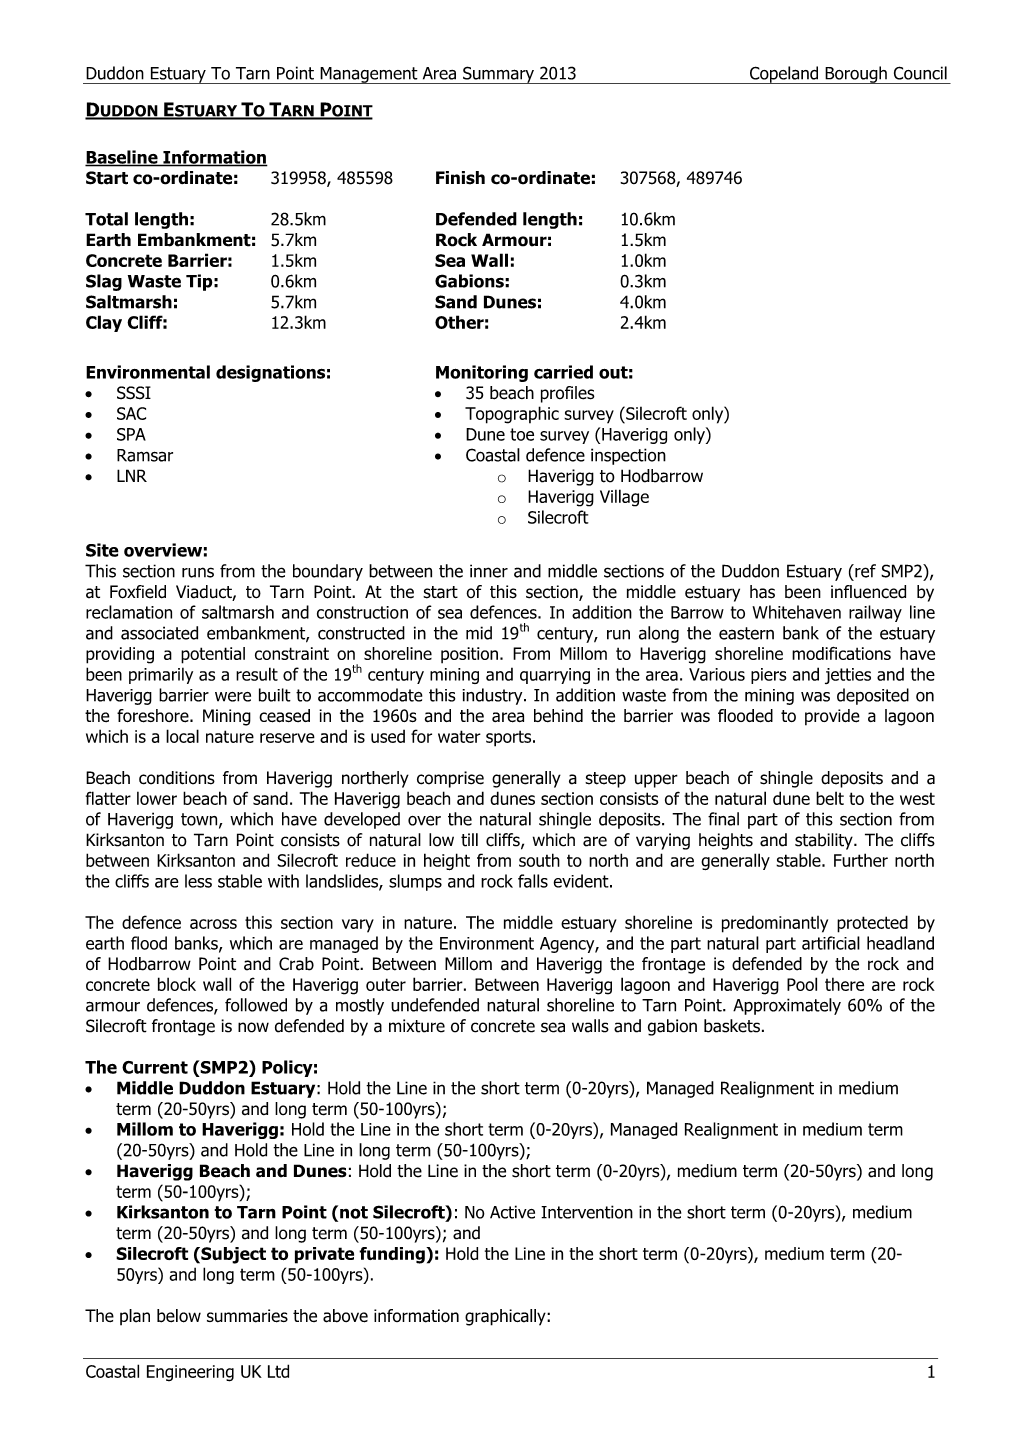 Duddon Estuary to Tarn Point Management Area Summary 2013 Copeland Borough Council